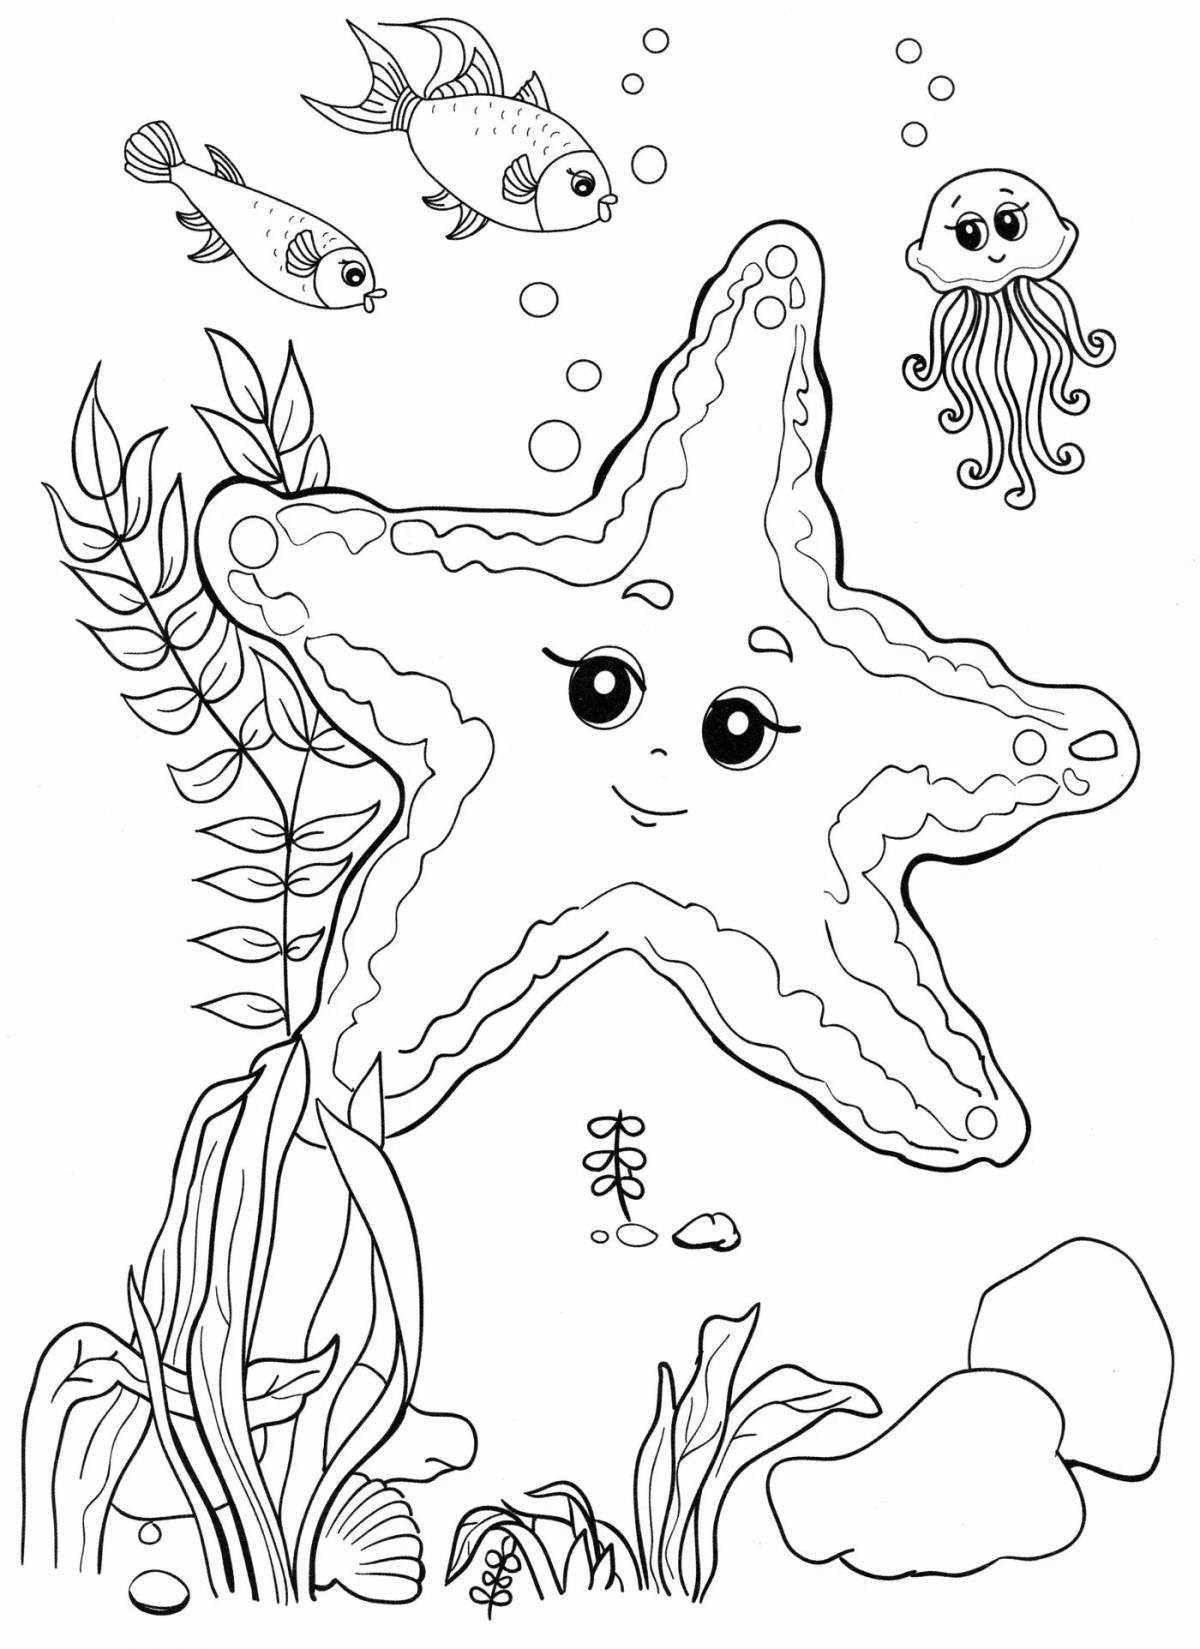 Tempting aquatic life coloring page